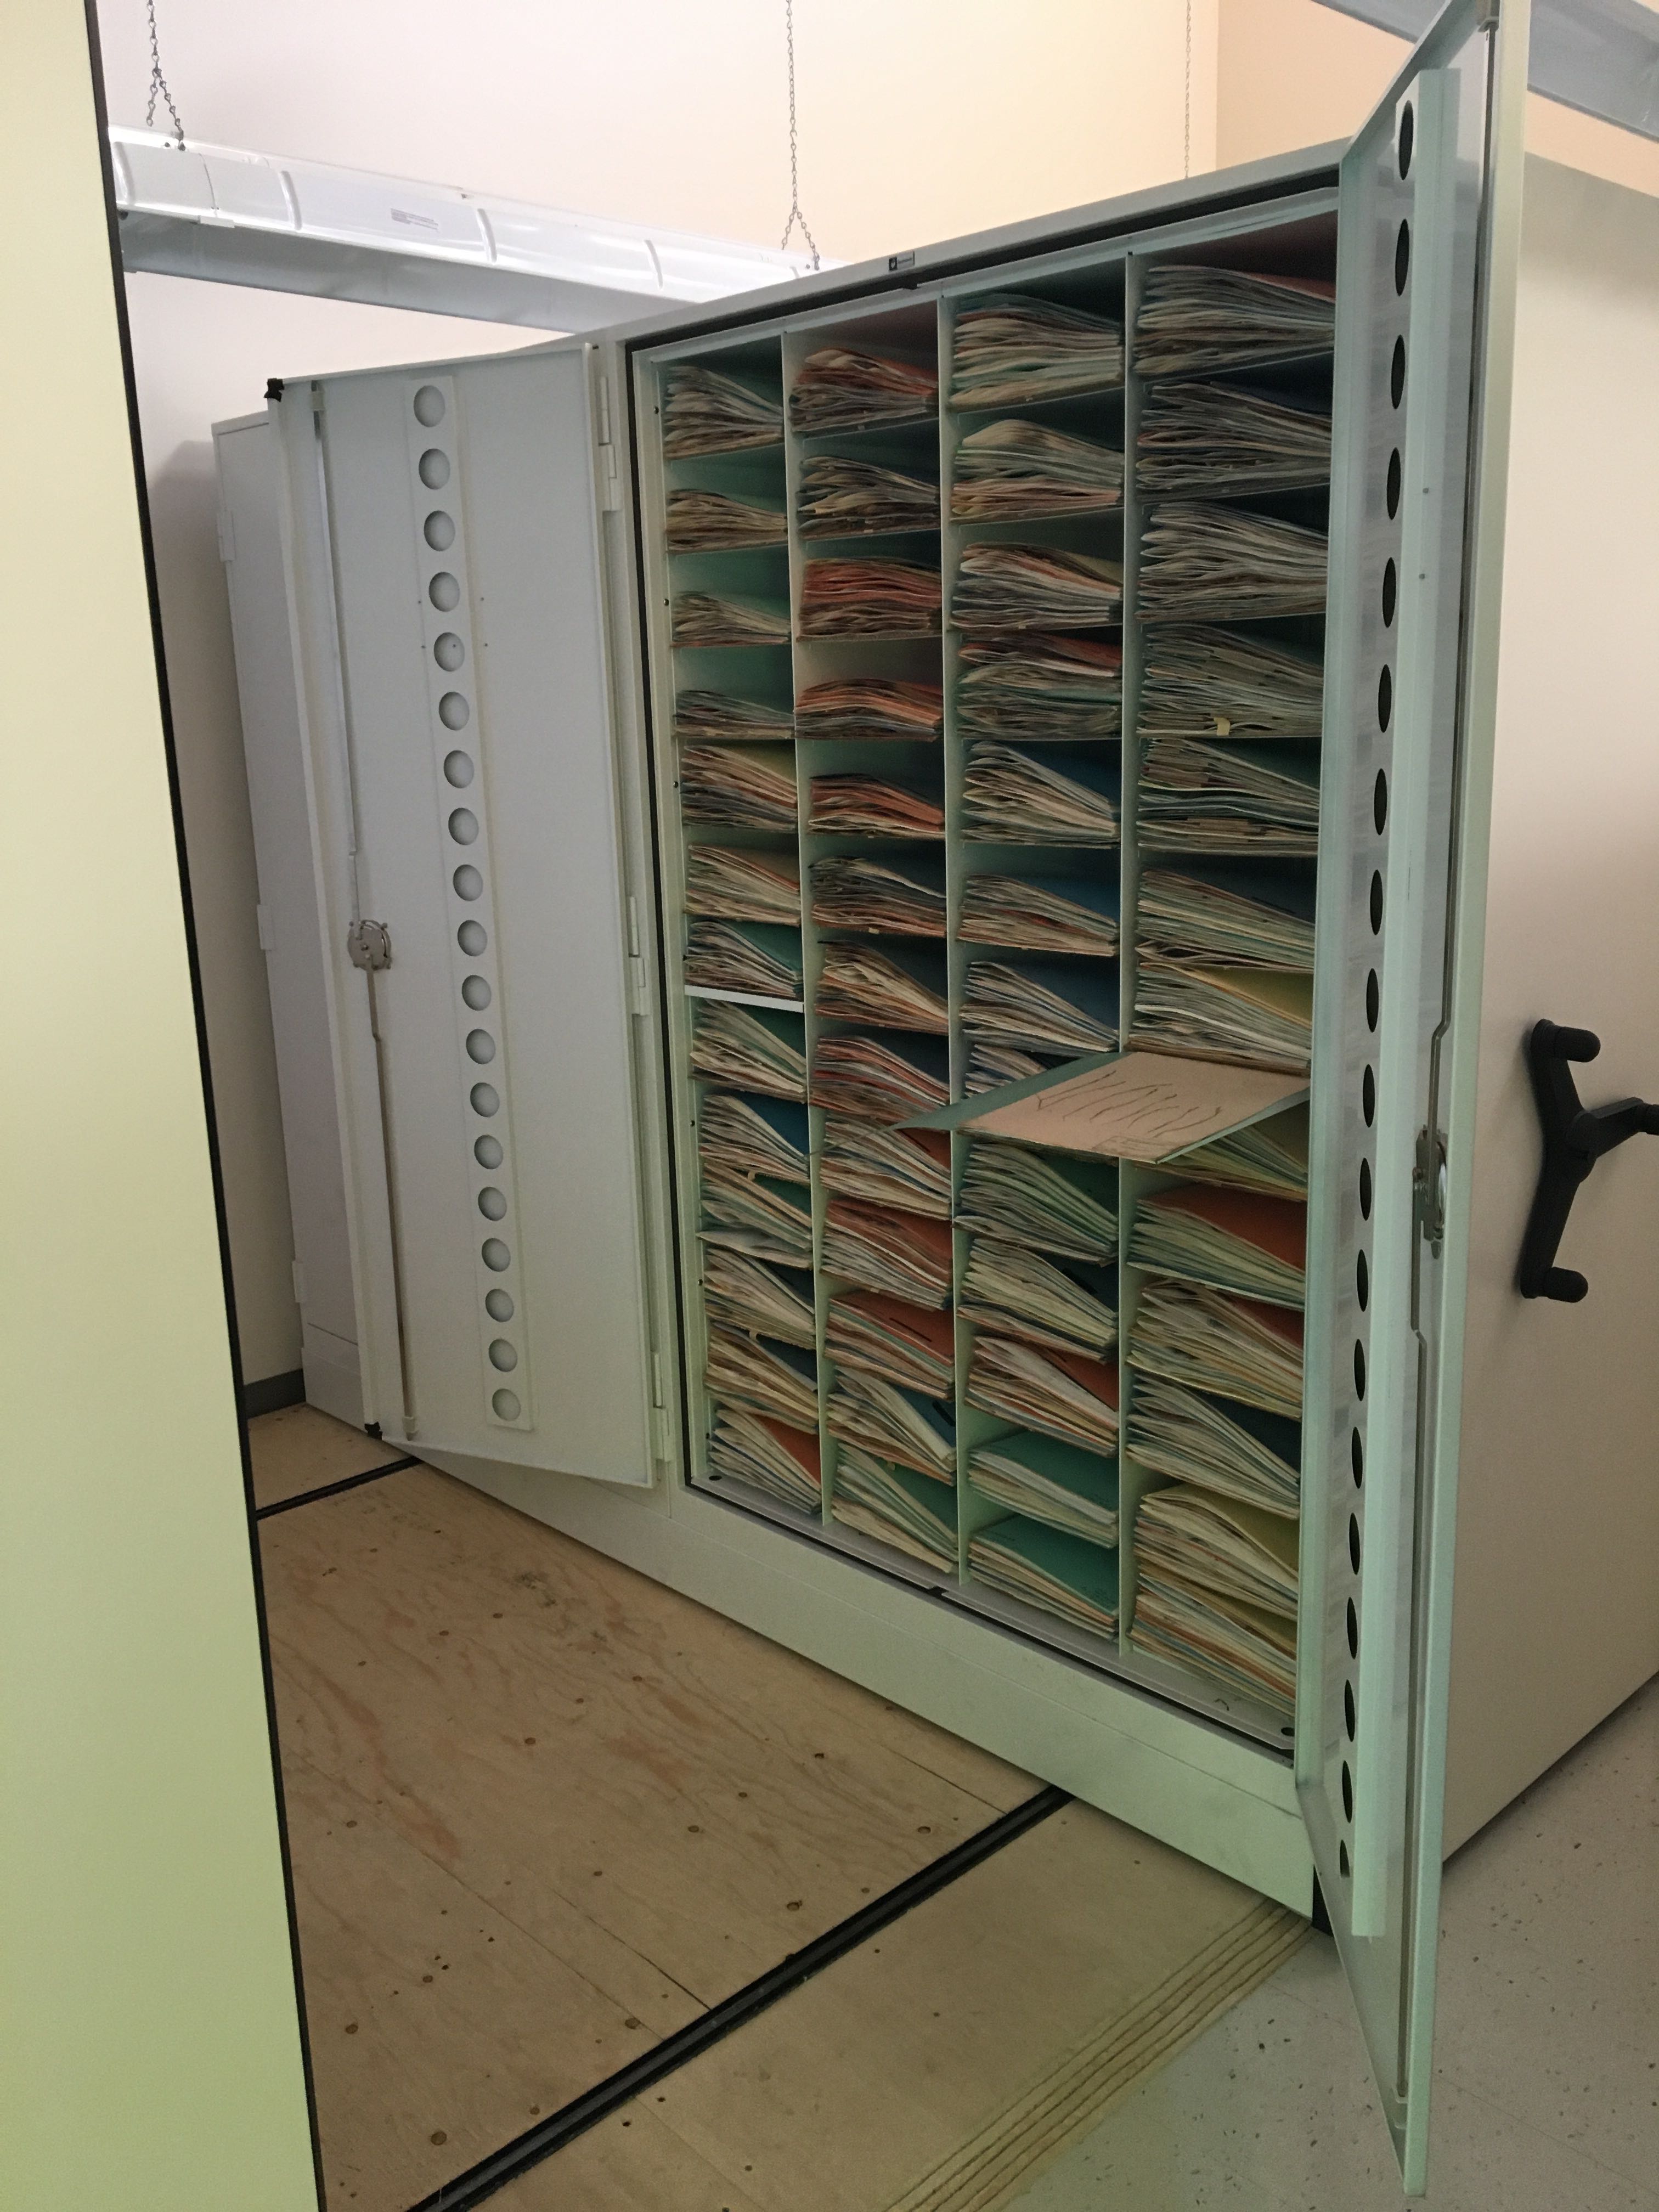 Herbarium cabinets